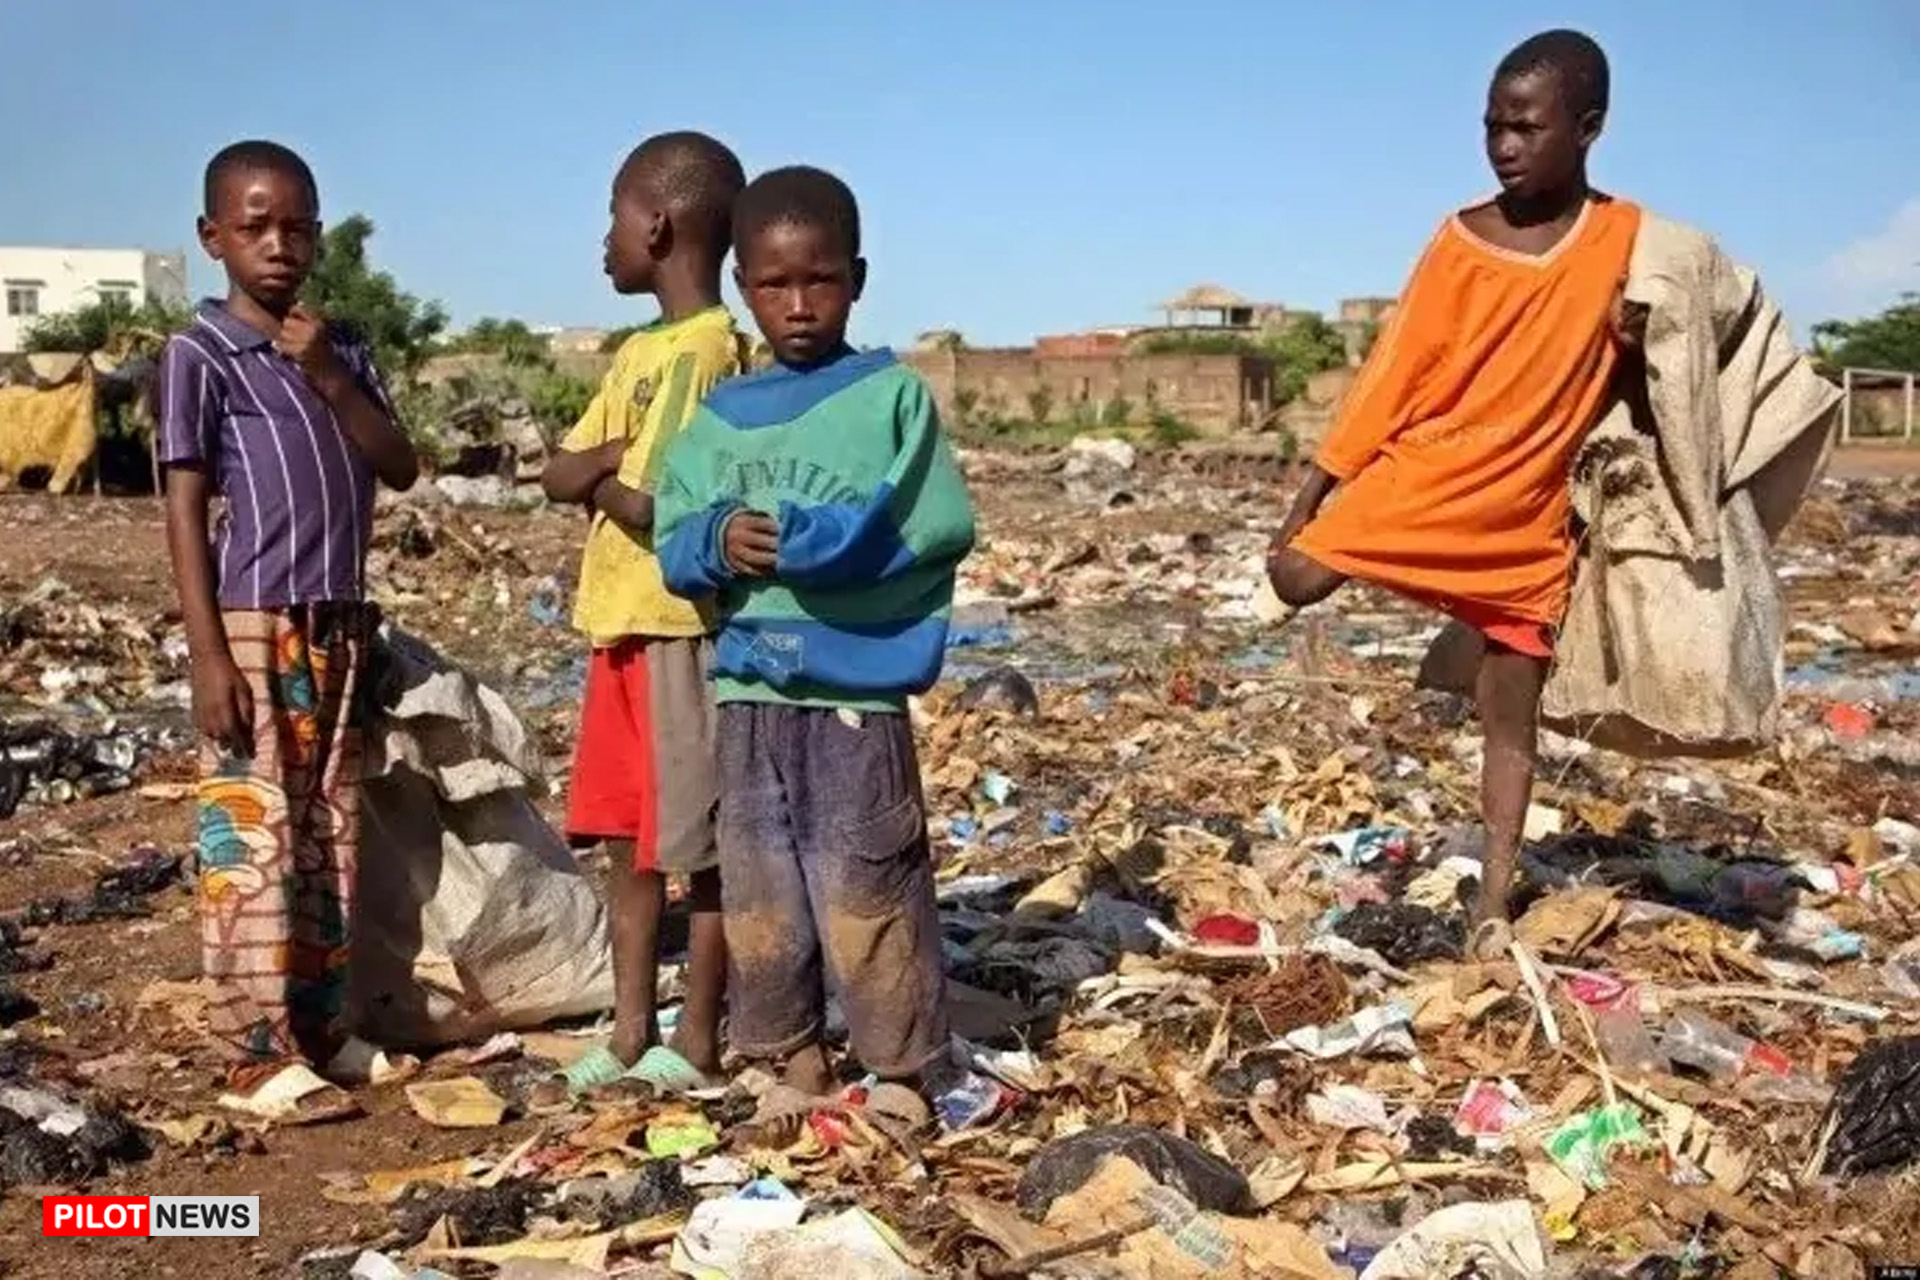 They lives in africa. Африканские жители бедные.